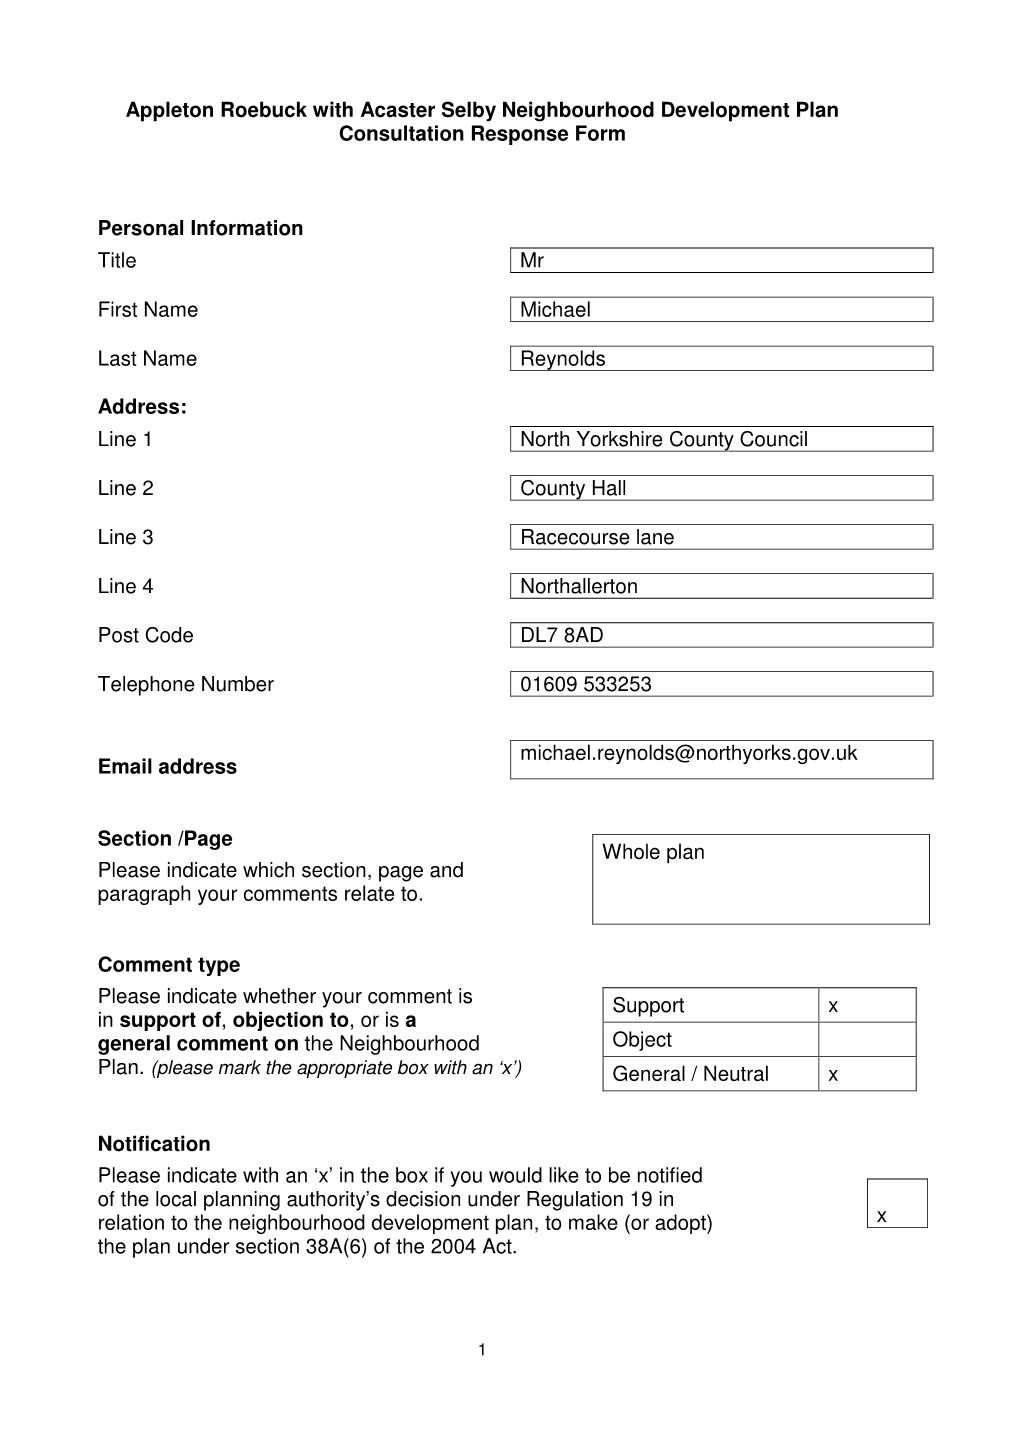 Appleton Roebuck with Acaster Selby Neighbourhood Development Plan Consultation Response Form